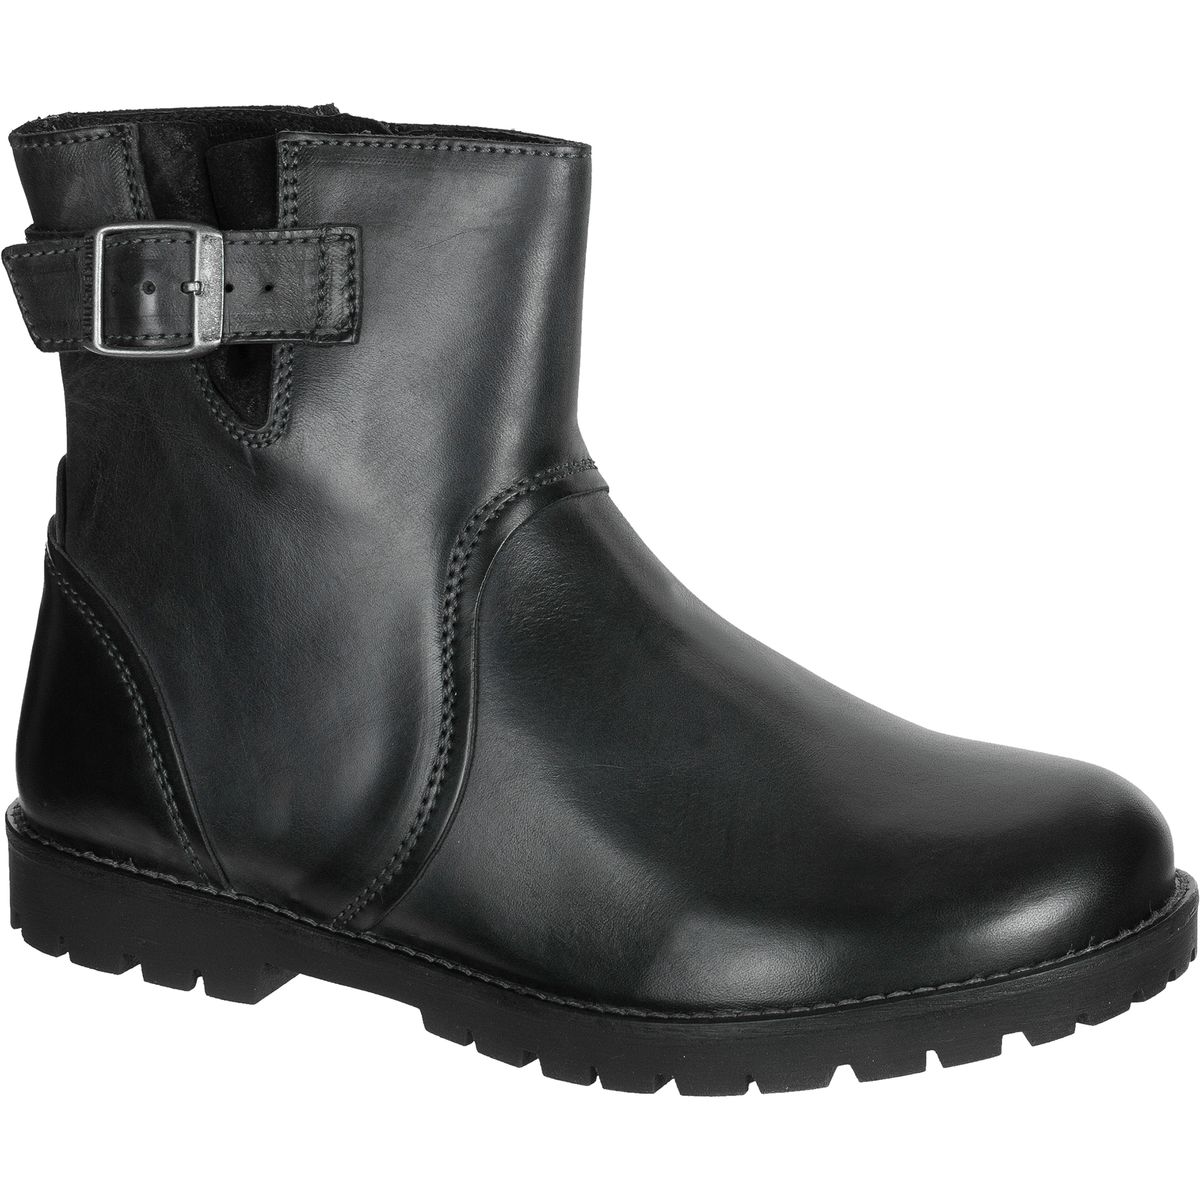 Birkenstock Stowe Leather Boot - Women's